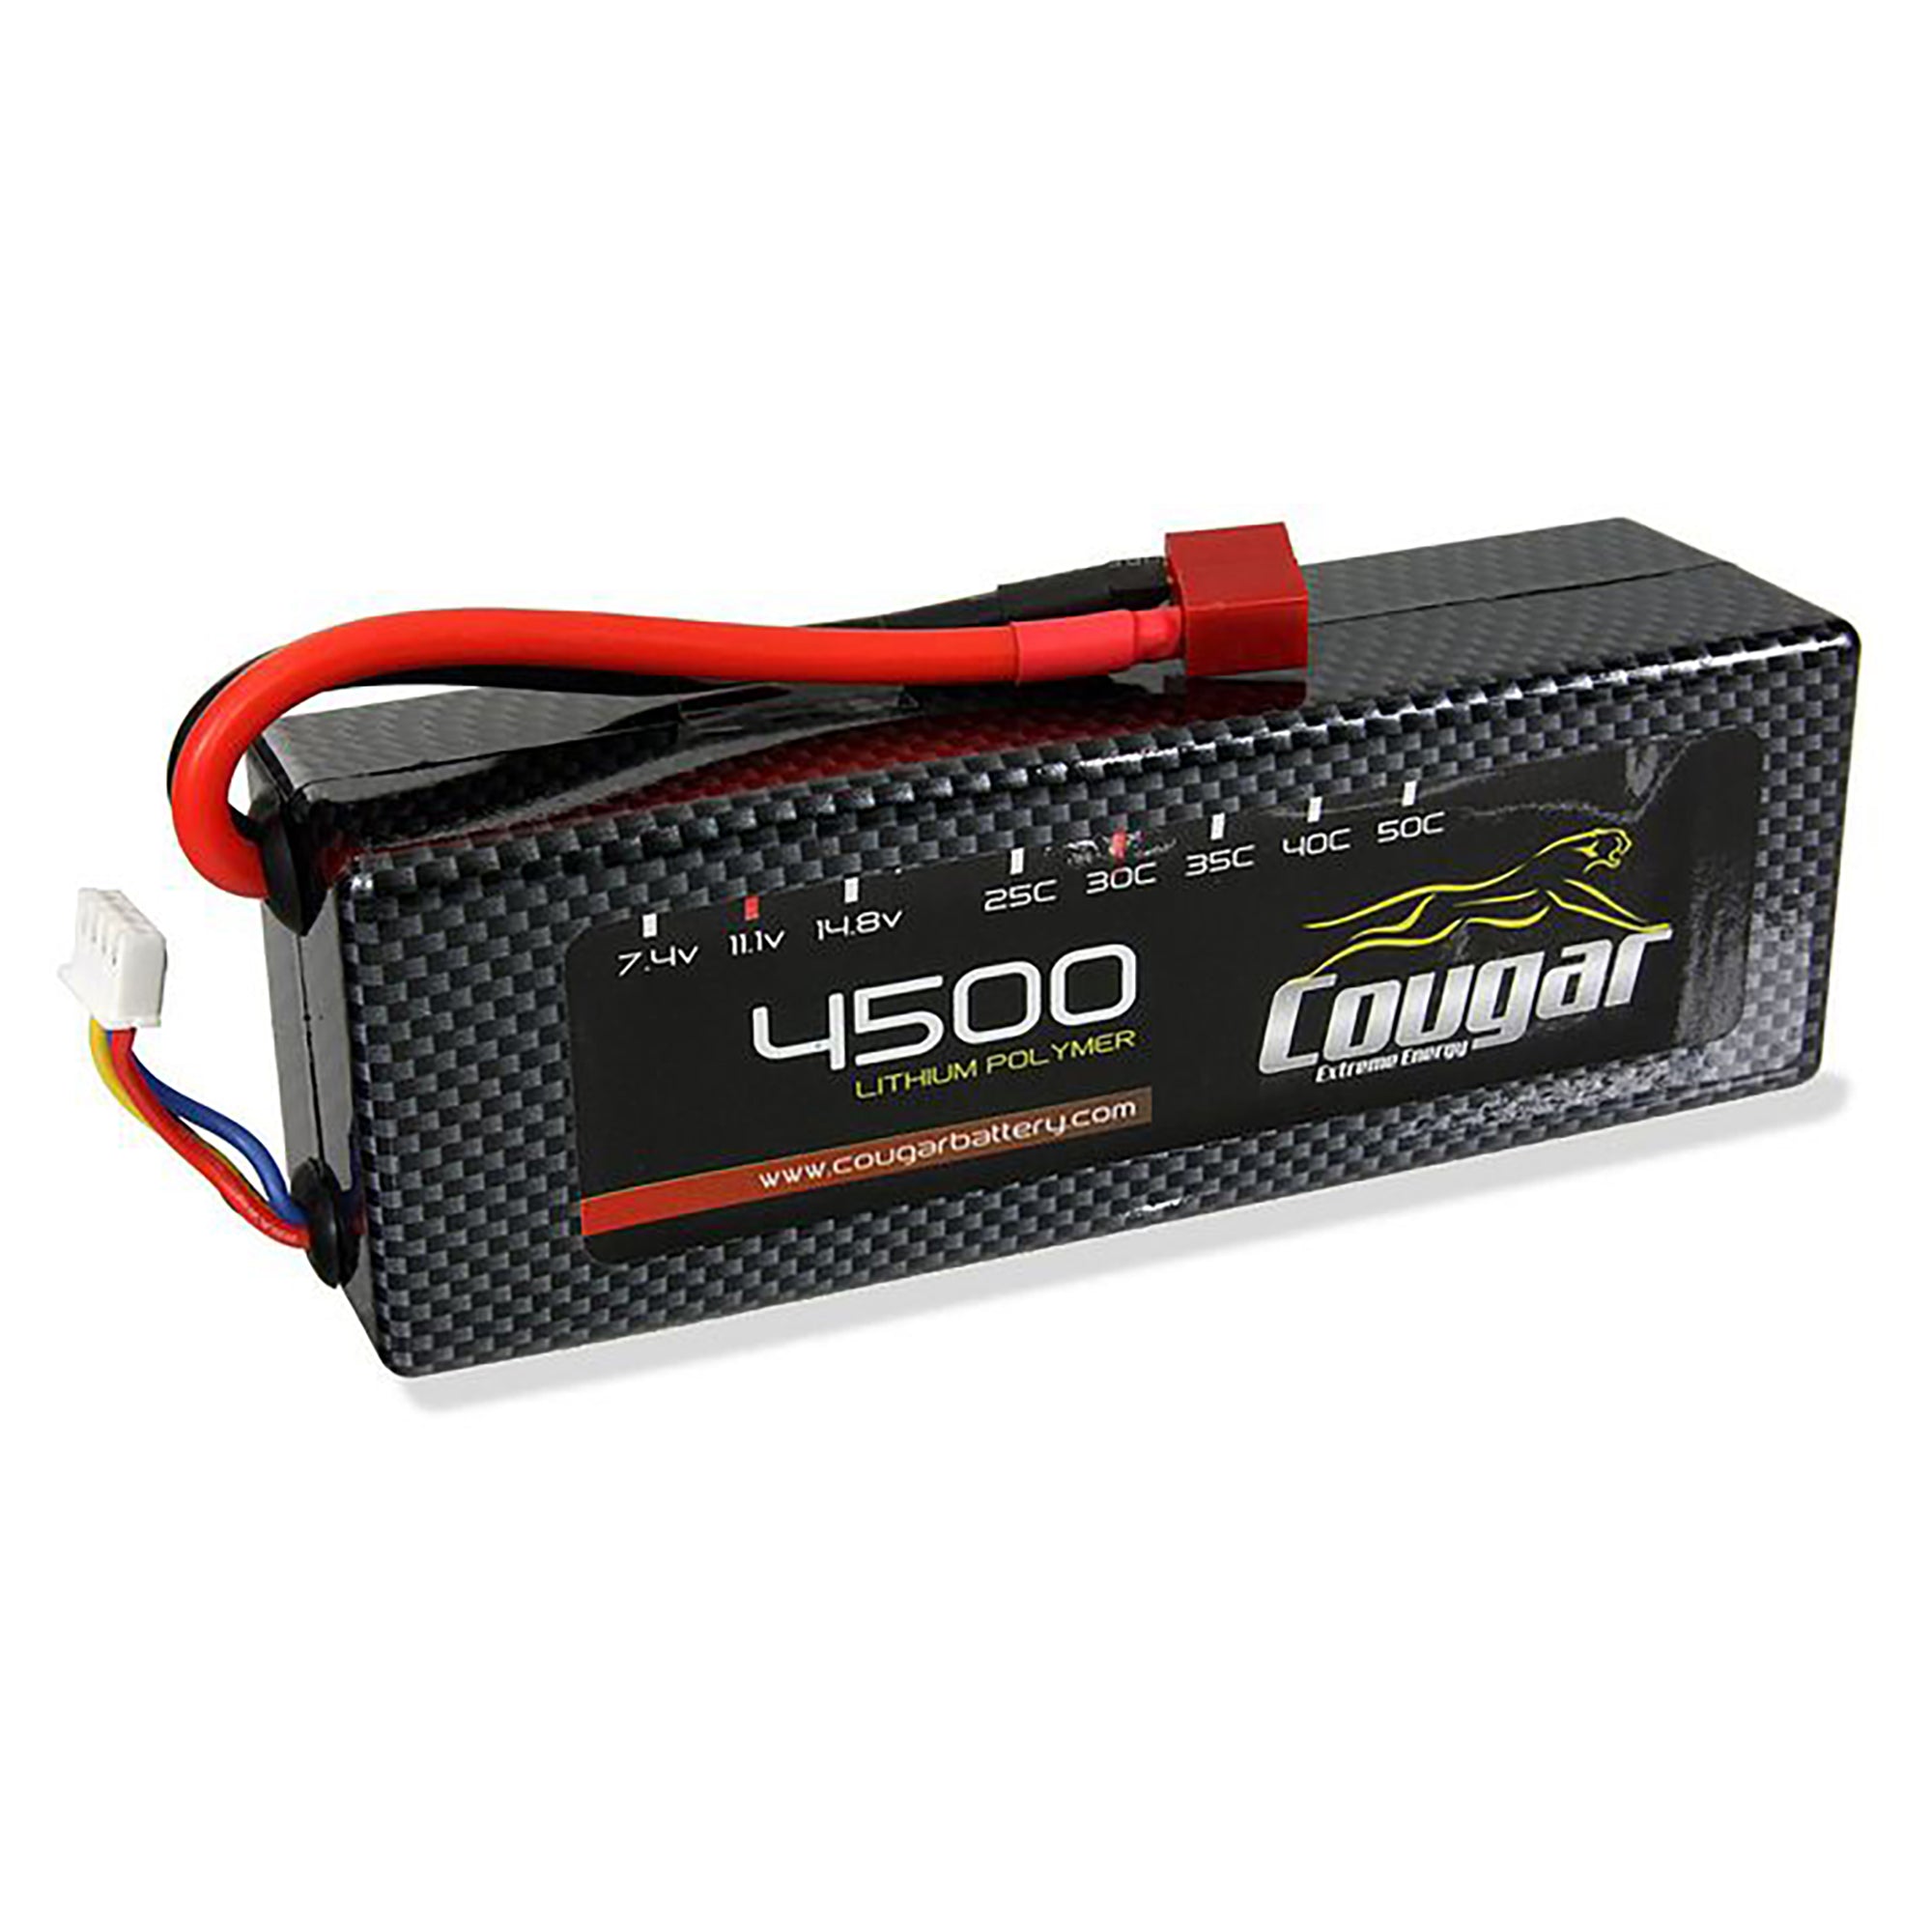 Cougar 4500mAh 11.1v 3S 30C Hard Case LiPo Battery